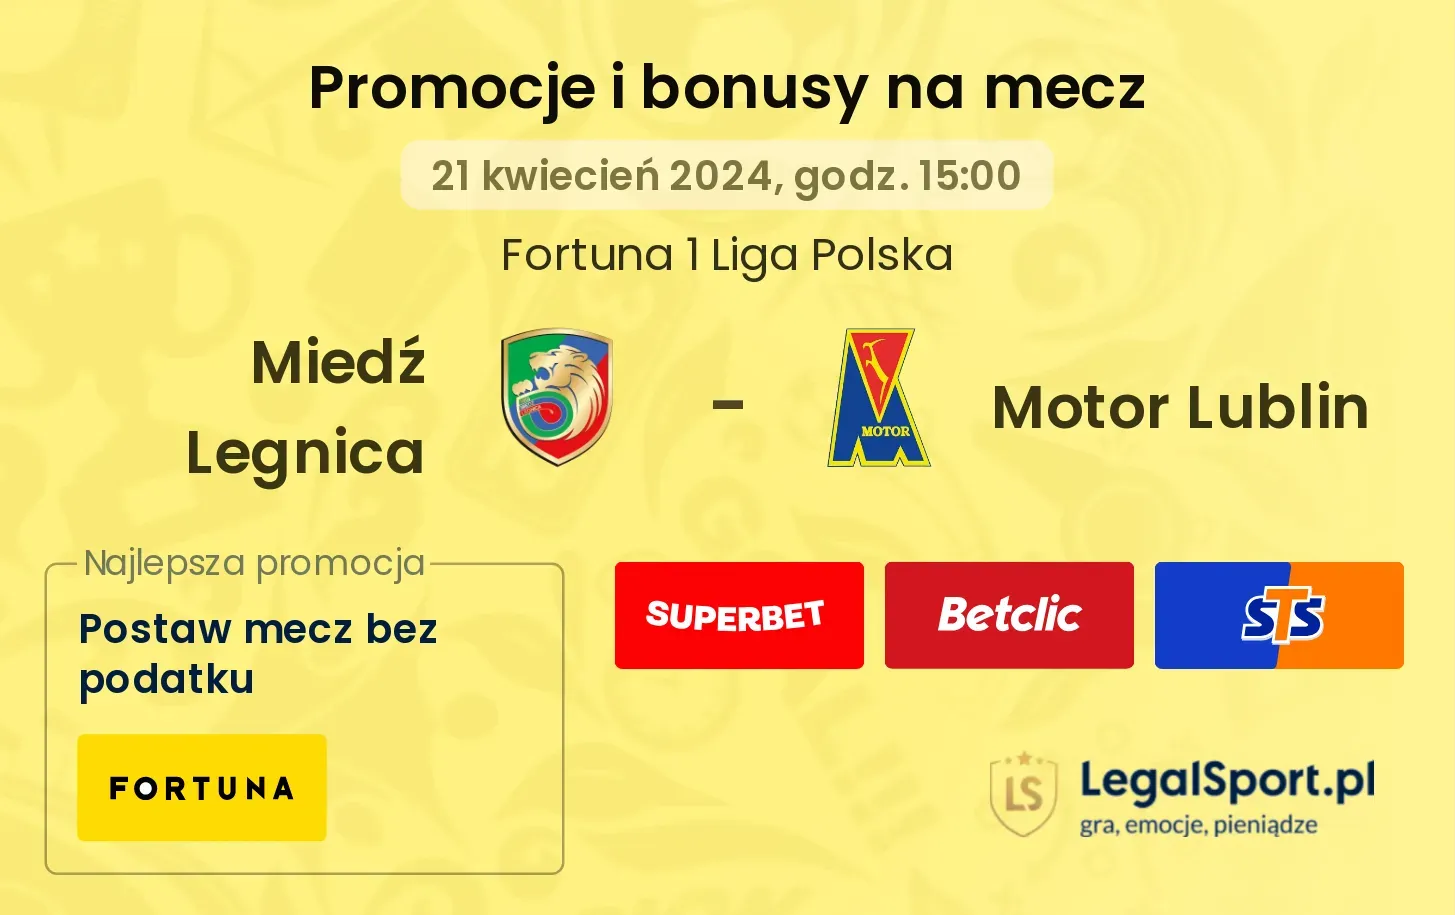 Miedź Legnica - Motor Lublin promocje bonusy na mecz